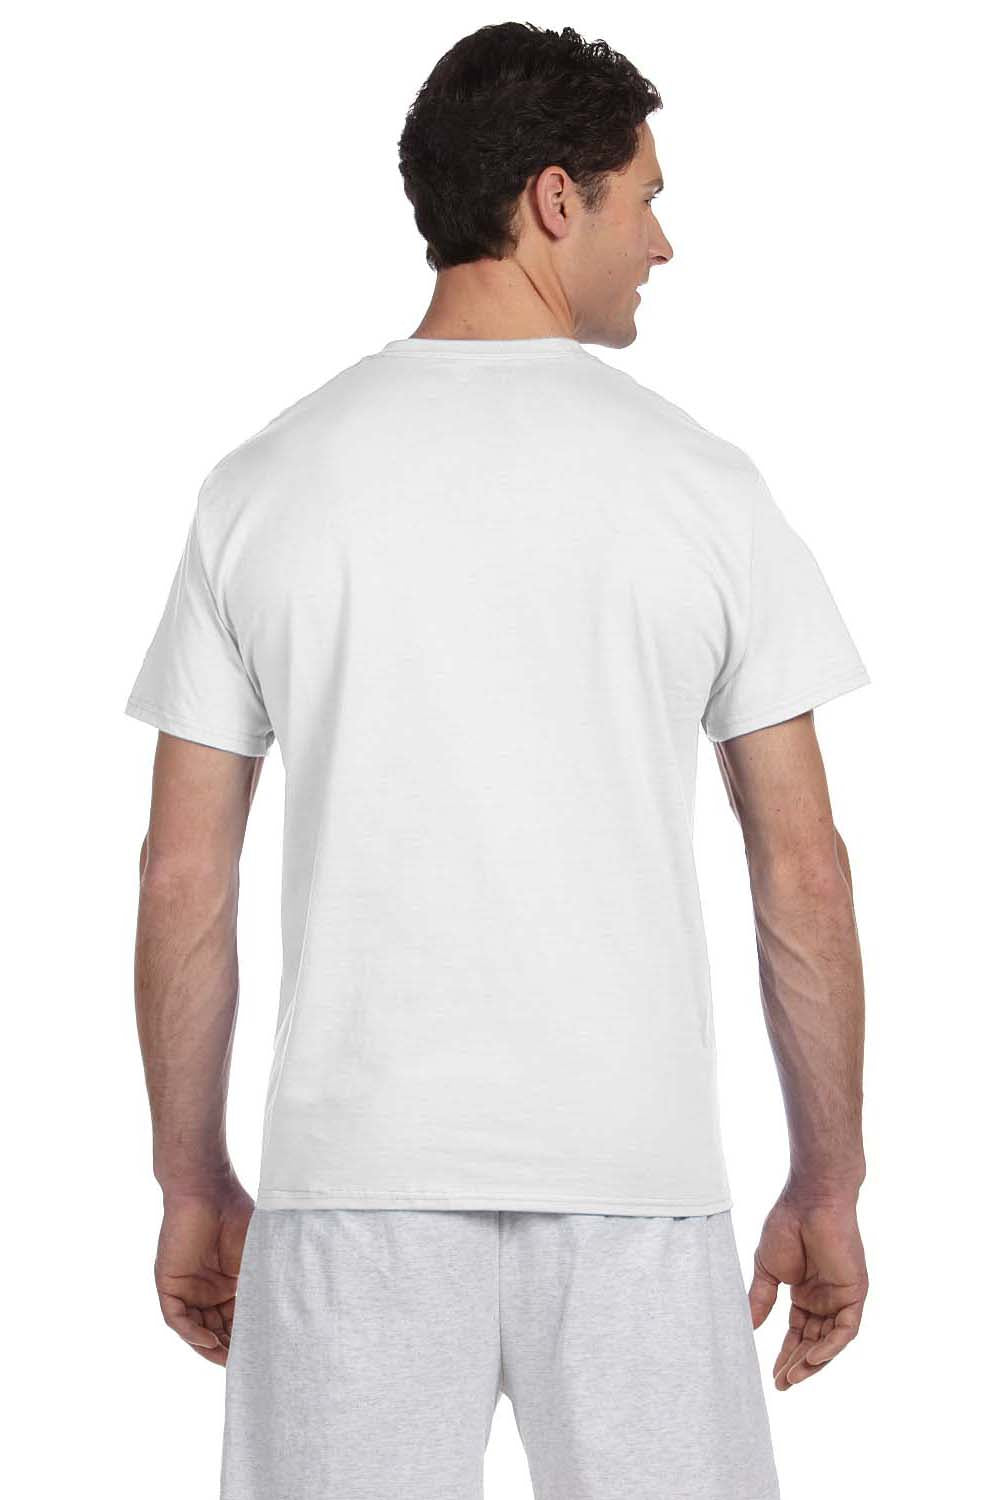 Champion T525C Mens Short Sleeve Crewneck T-Shirt White Back